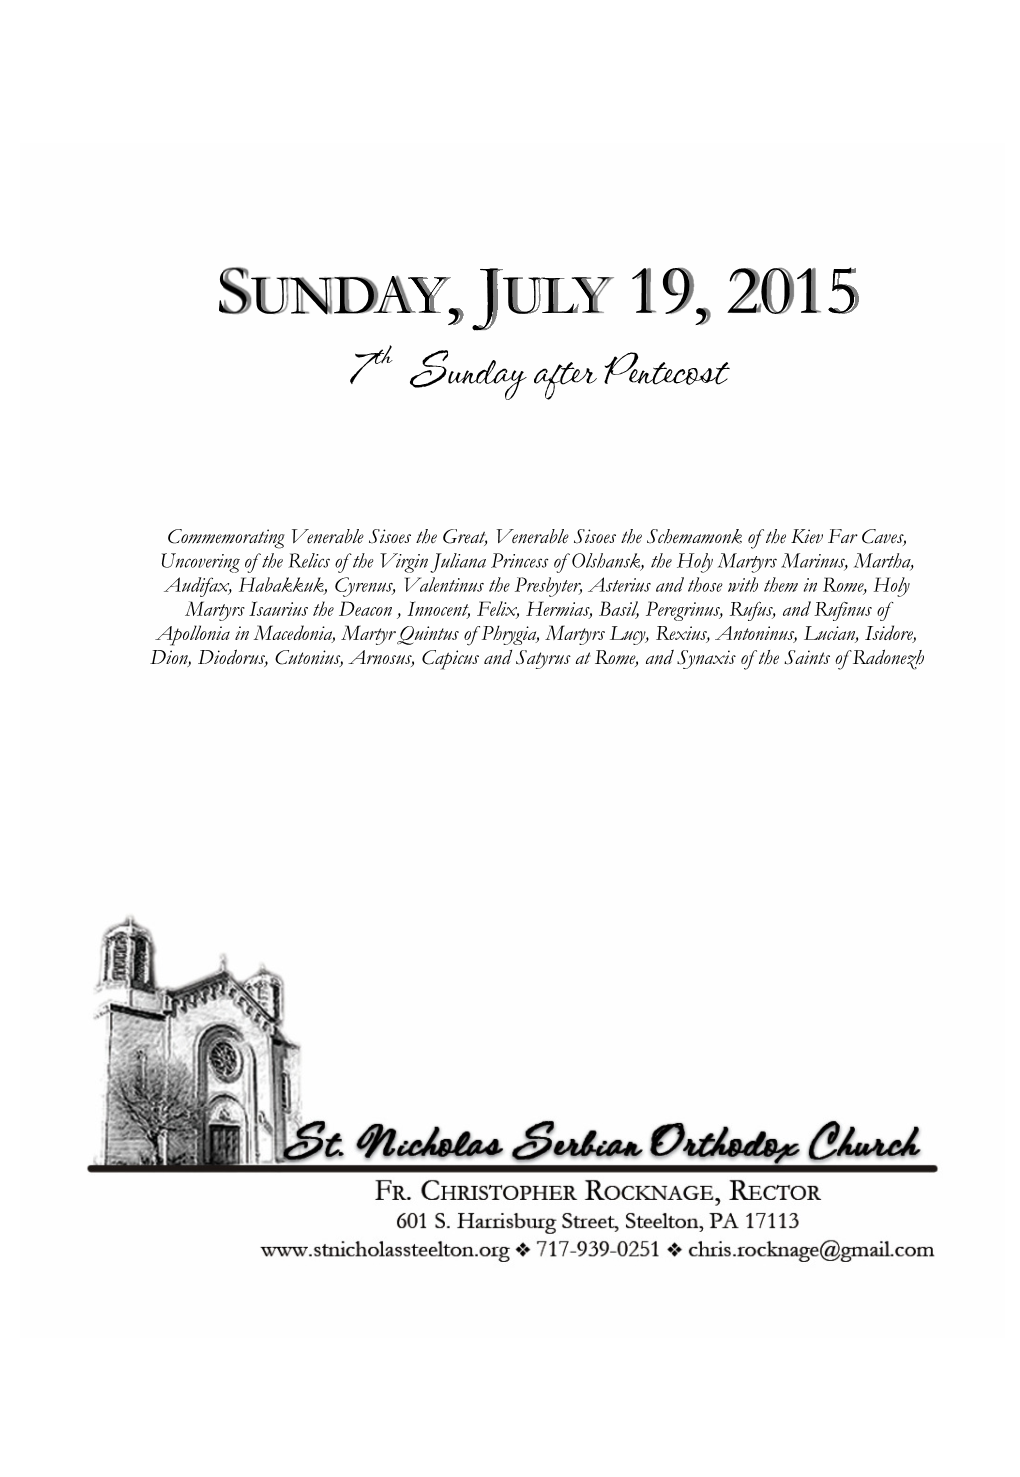 St Nicholas Church Bulletin 2015 07 19 Final.Pub